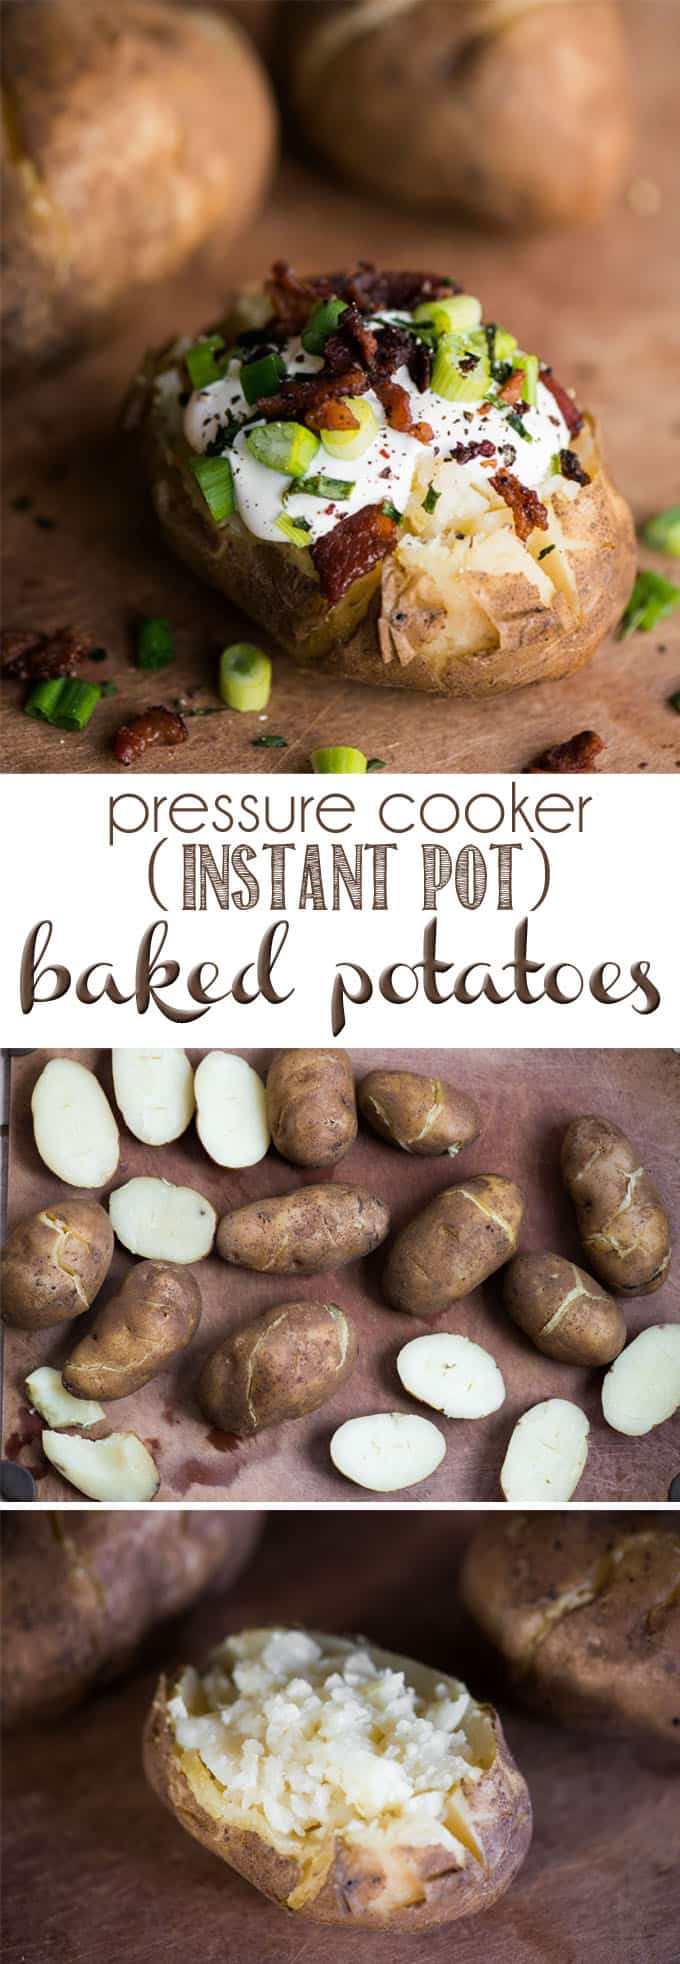 Baked Potato In Instant Pot
 Pressure Cooker Instant Pot Baked Potatoes